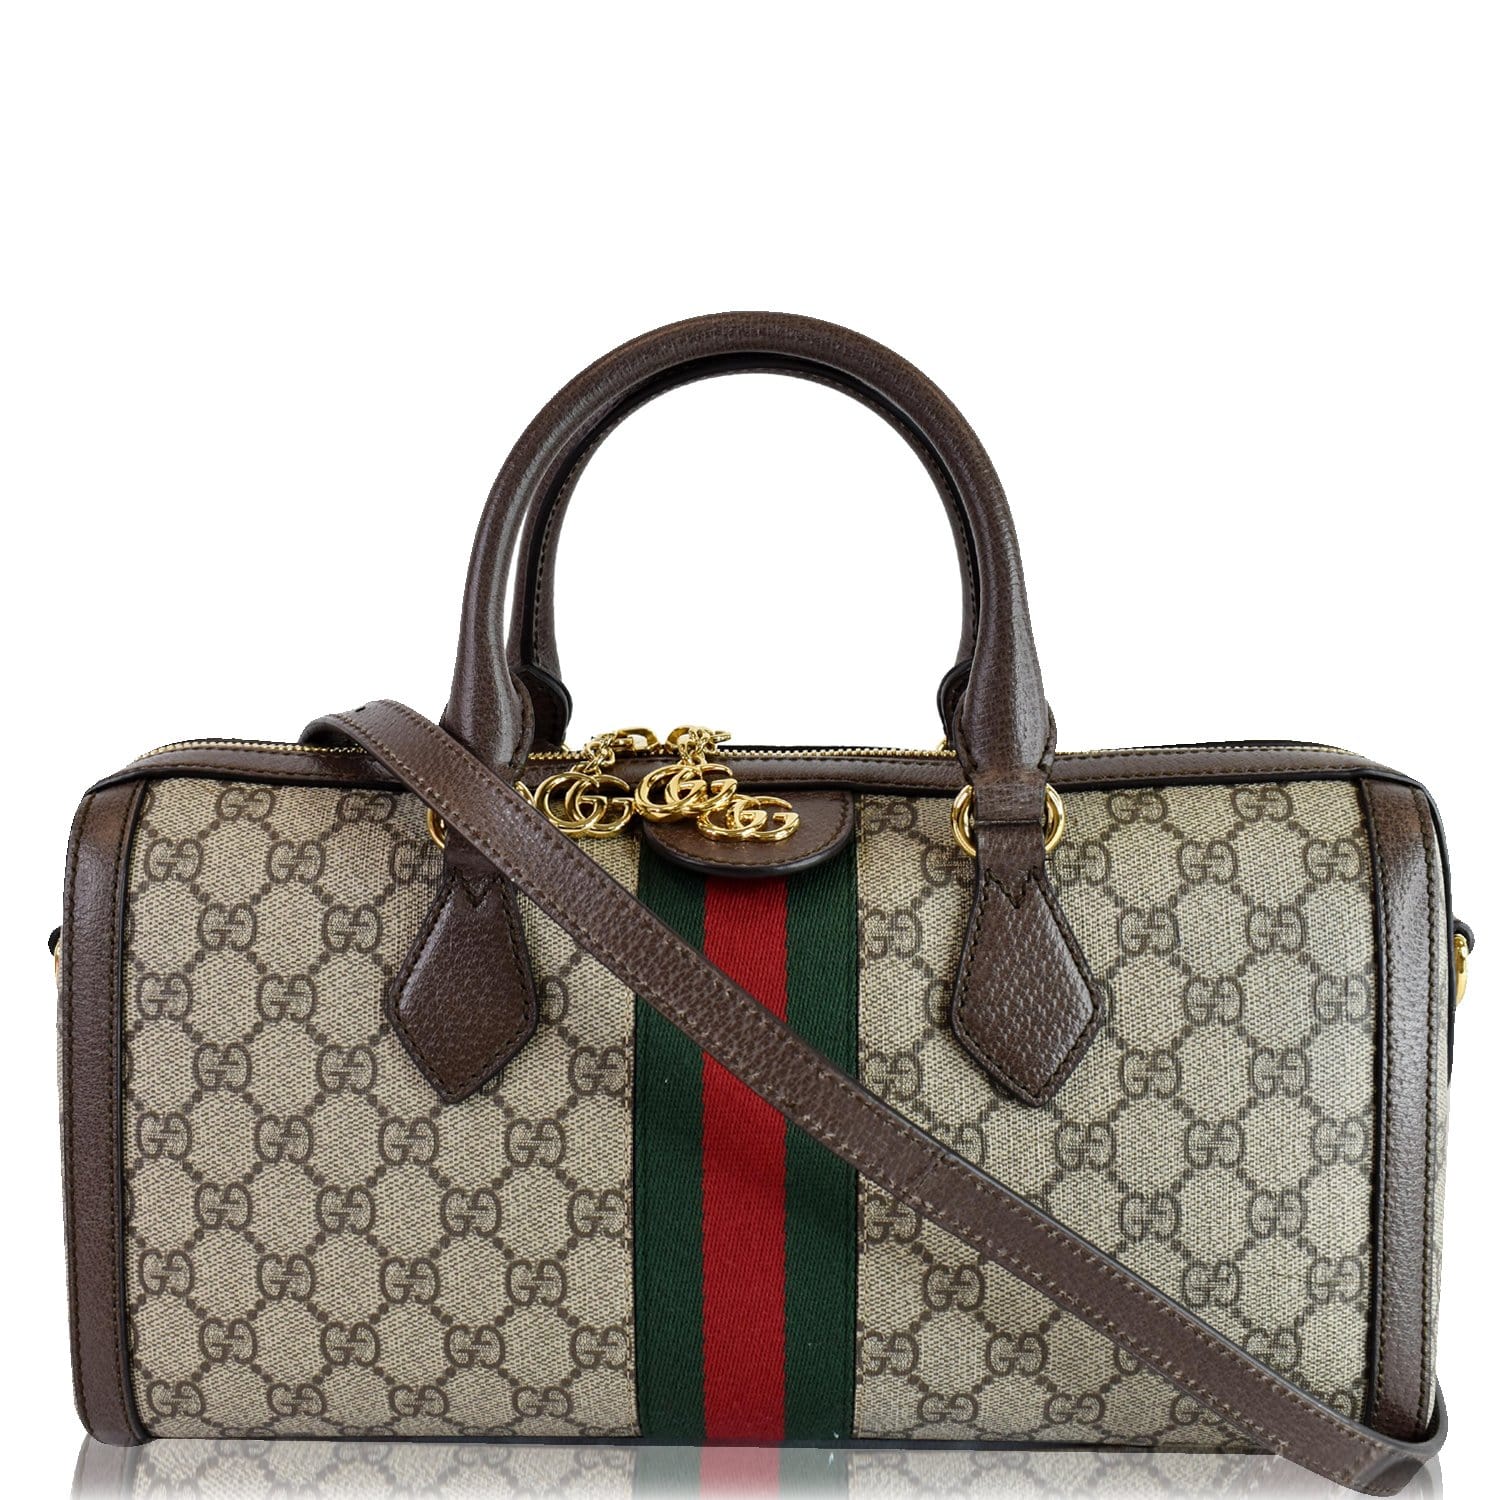 Gucci Women's Handbags, Authenticity Guaranteed